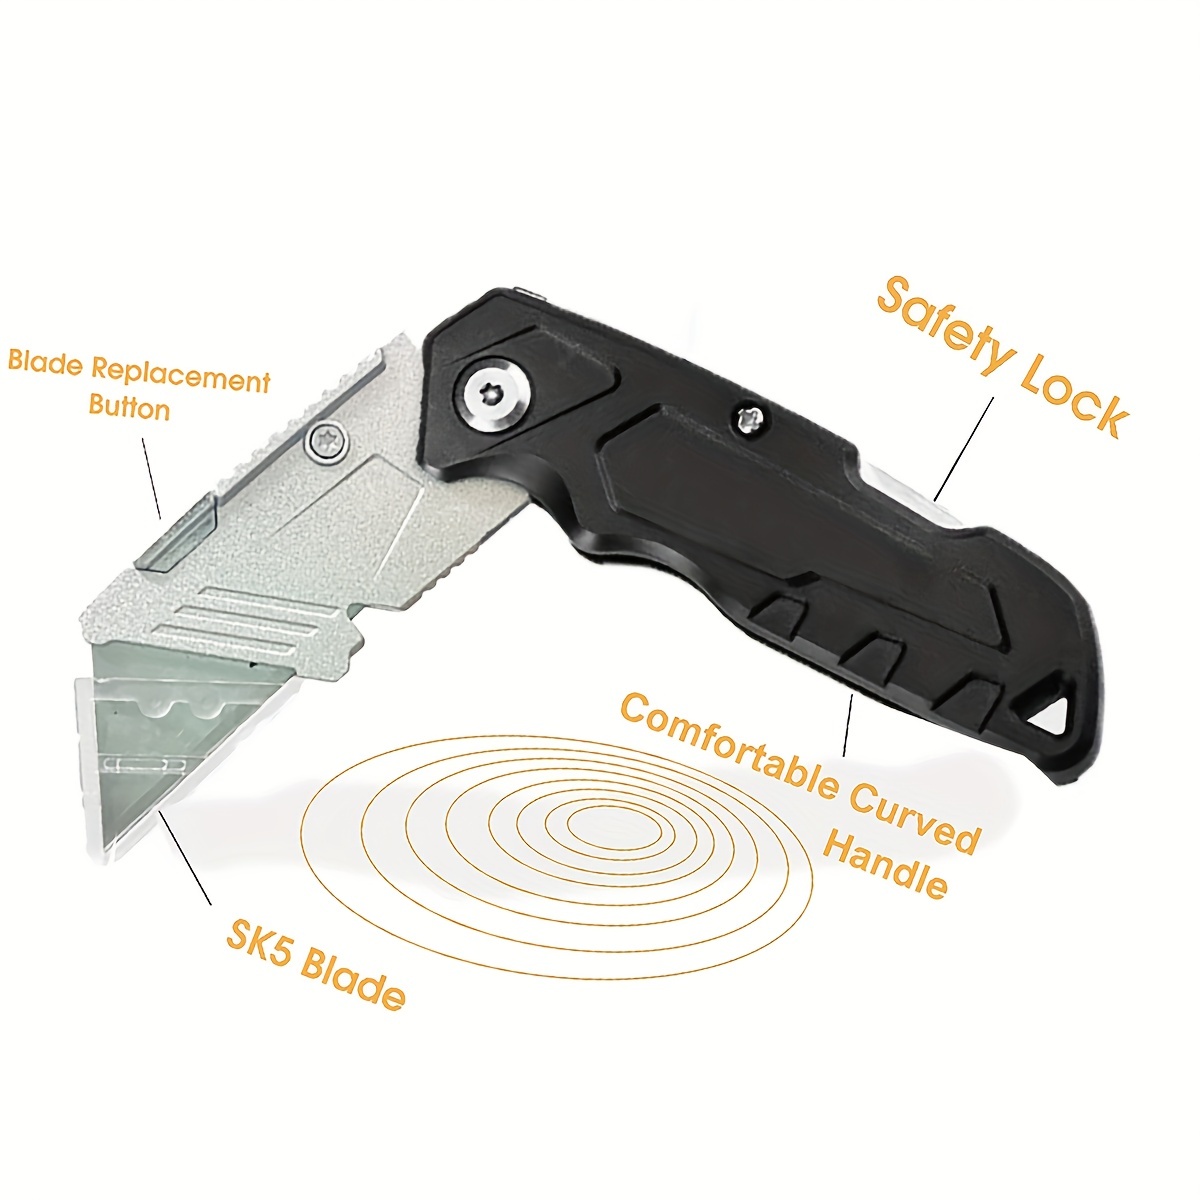 Die Cast Metal UTILITY KNIFE Box Cutter Retractable Pocket Razor